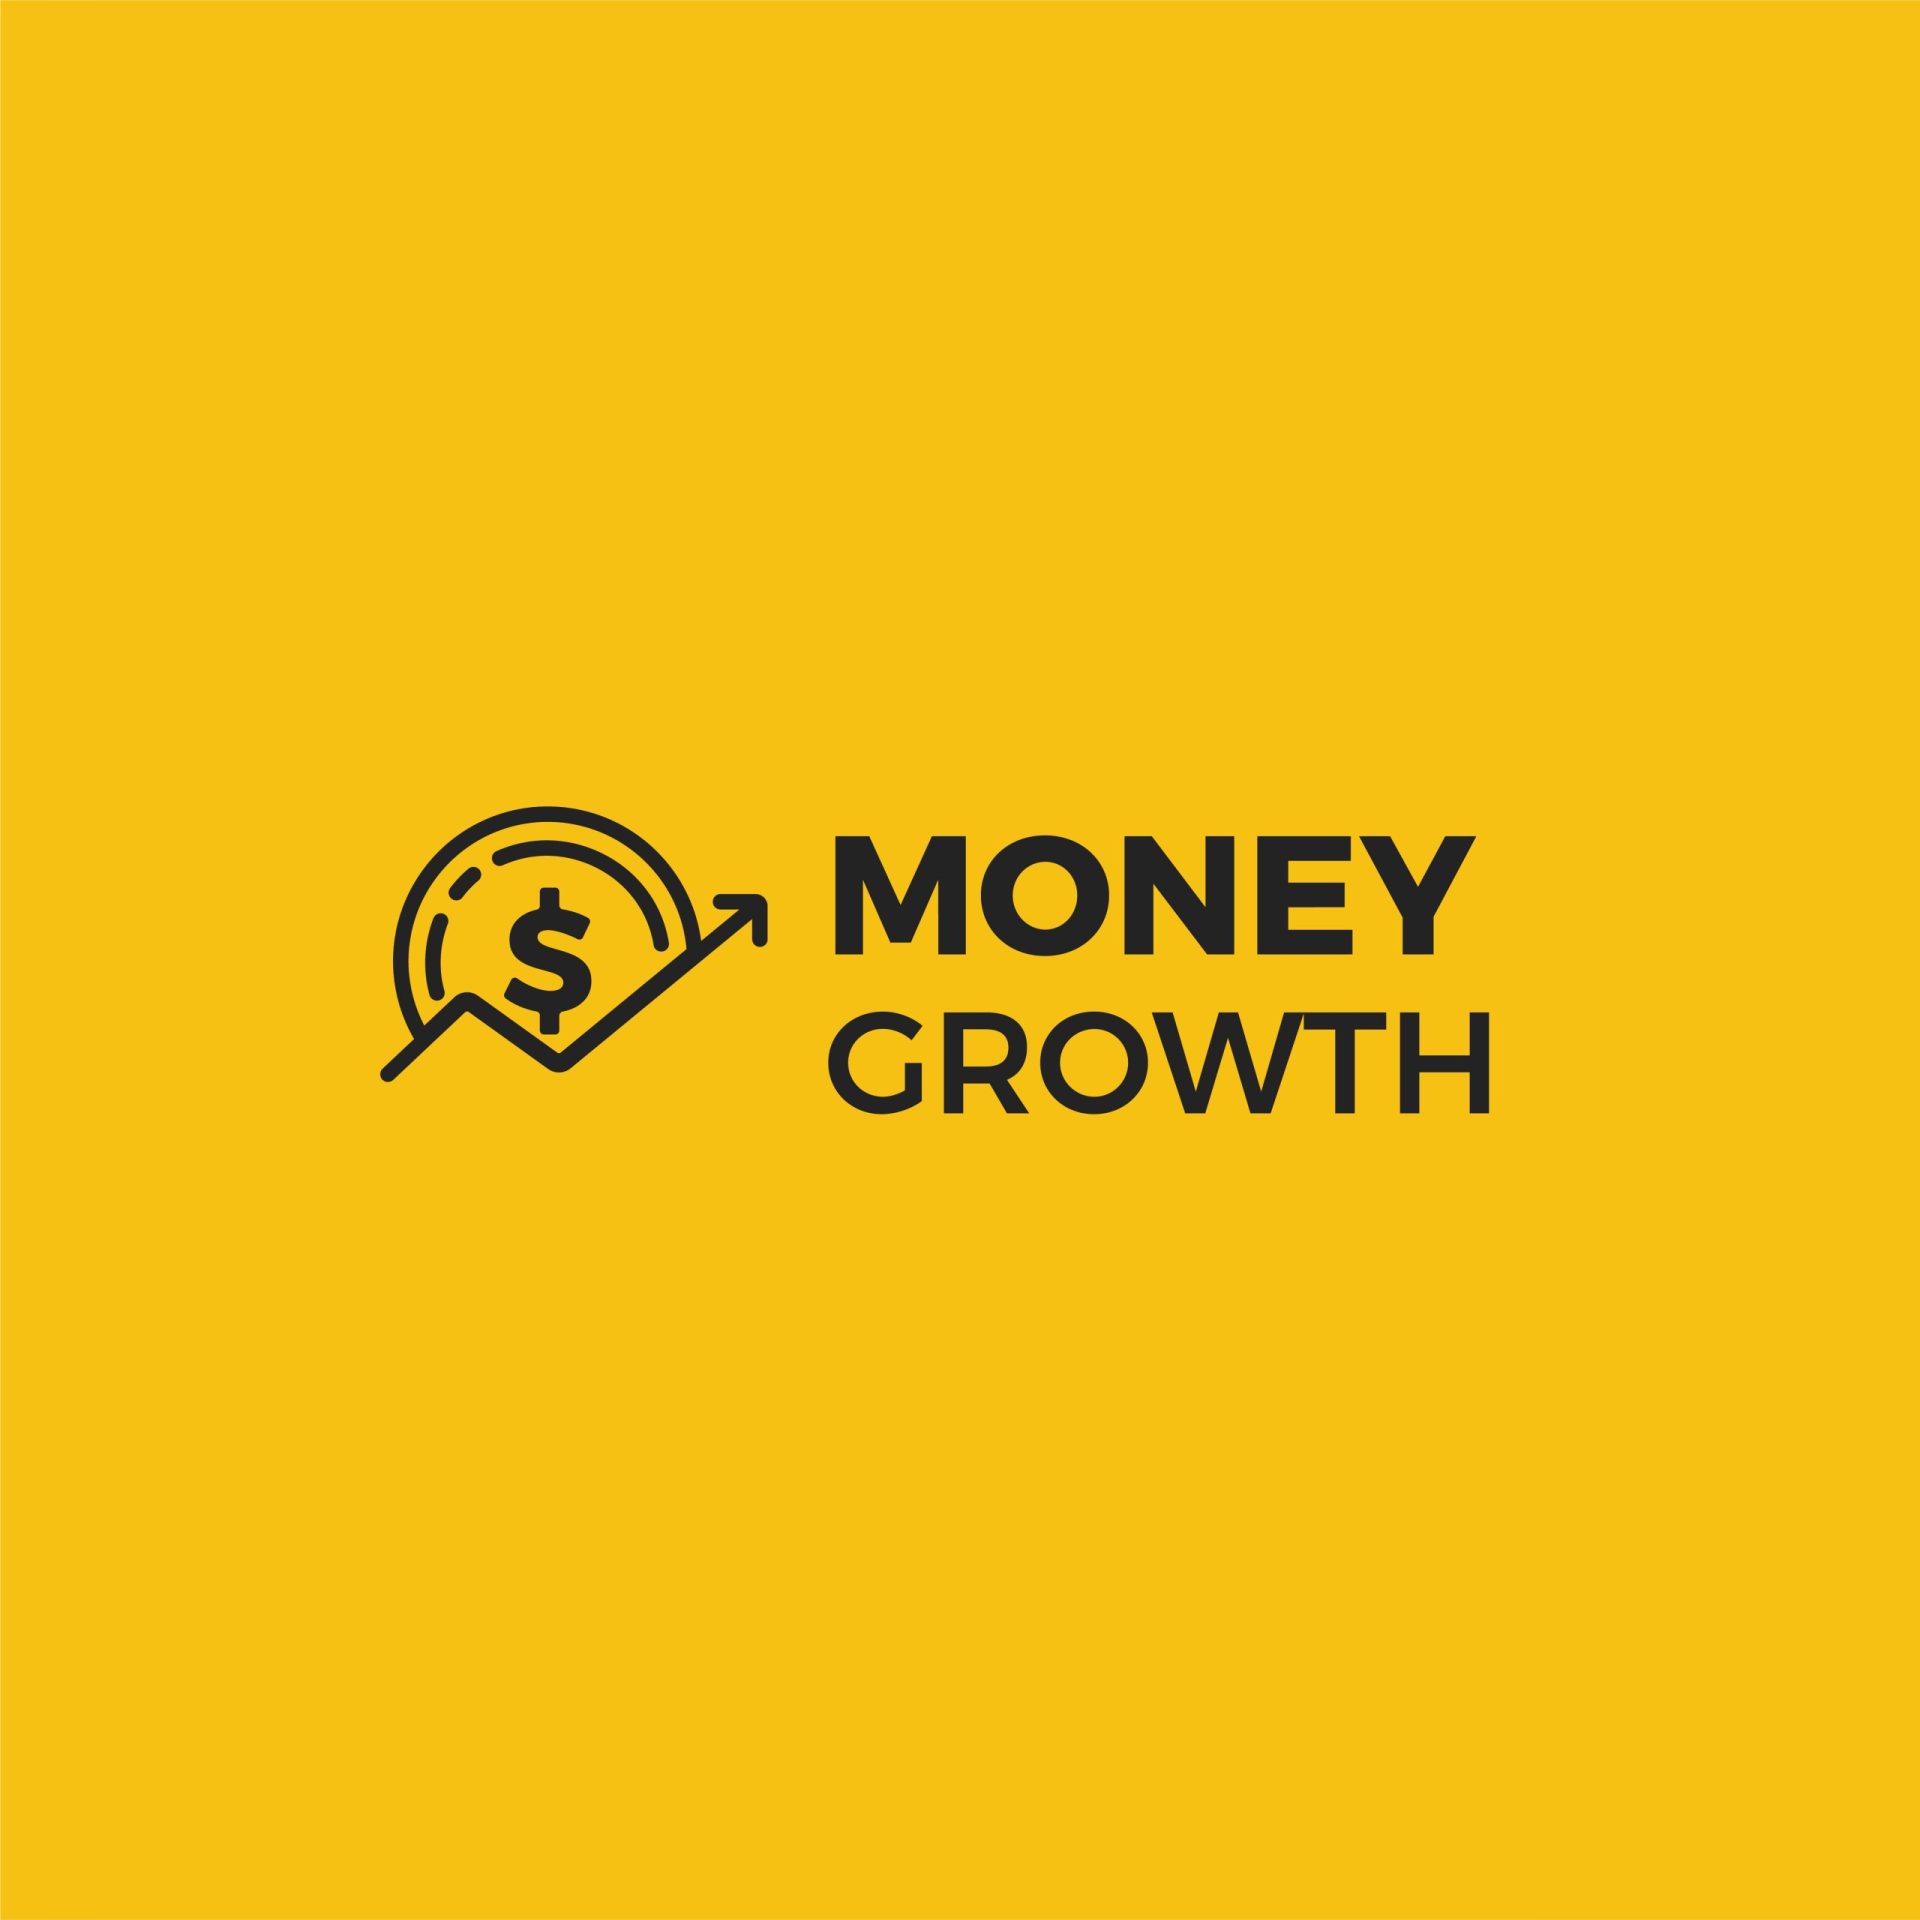 money logo ideas 6